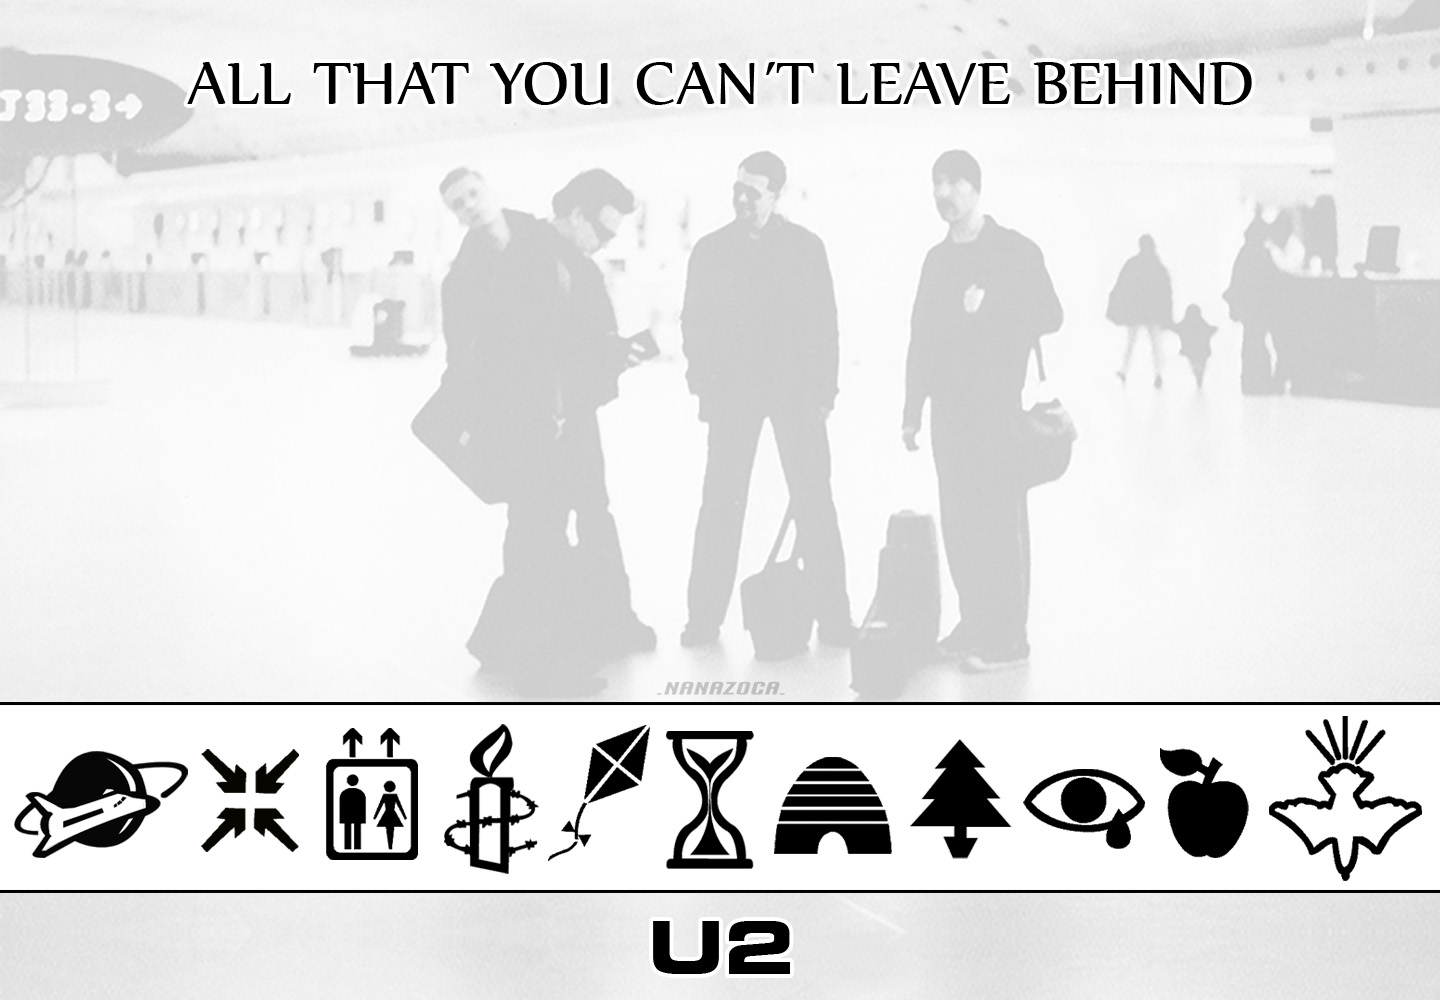 4walkON-All That You Cant Leave Behind -U2 - YouTube